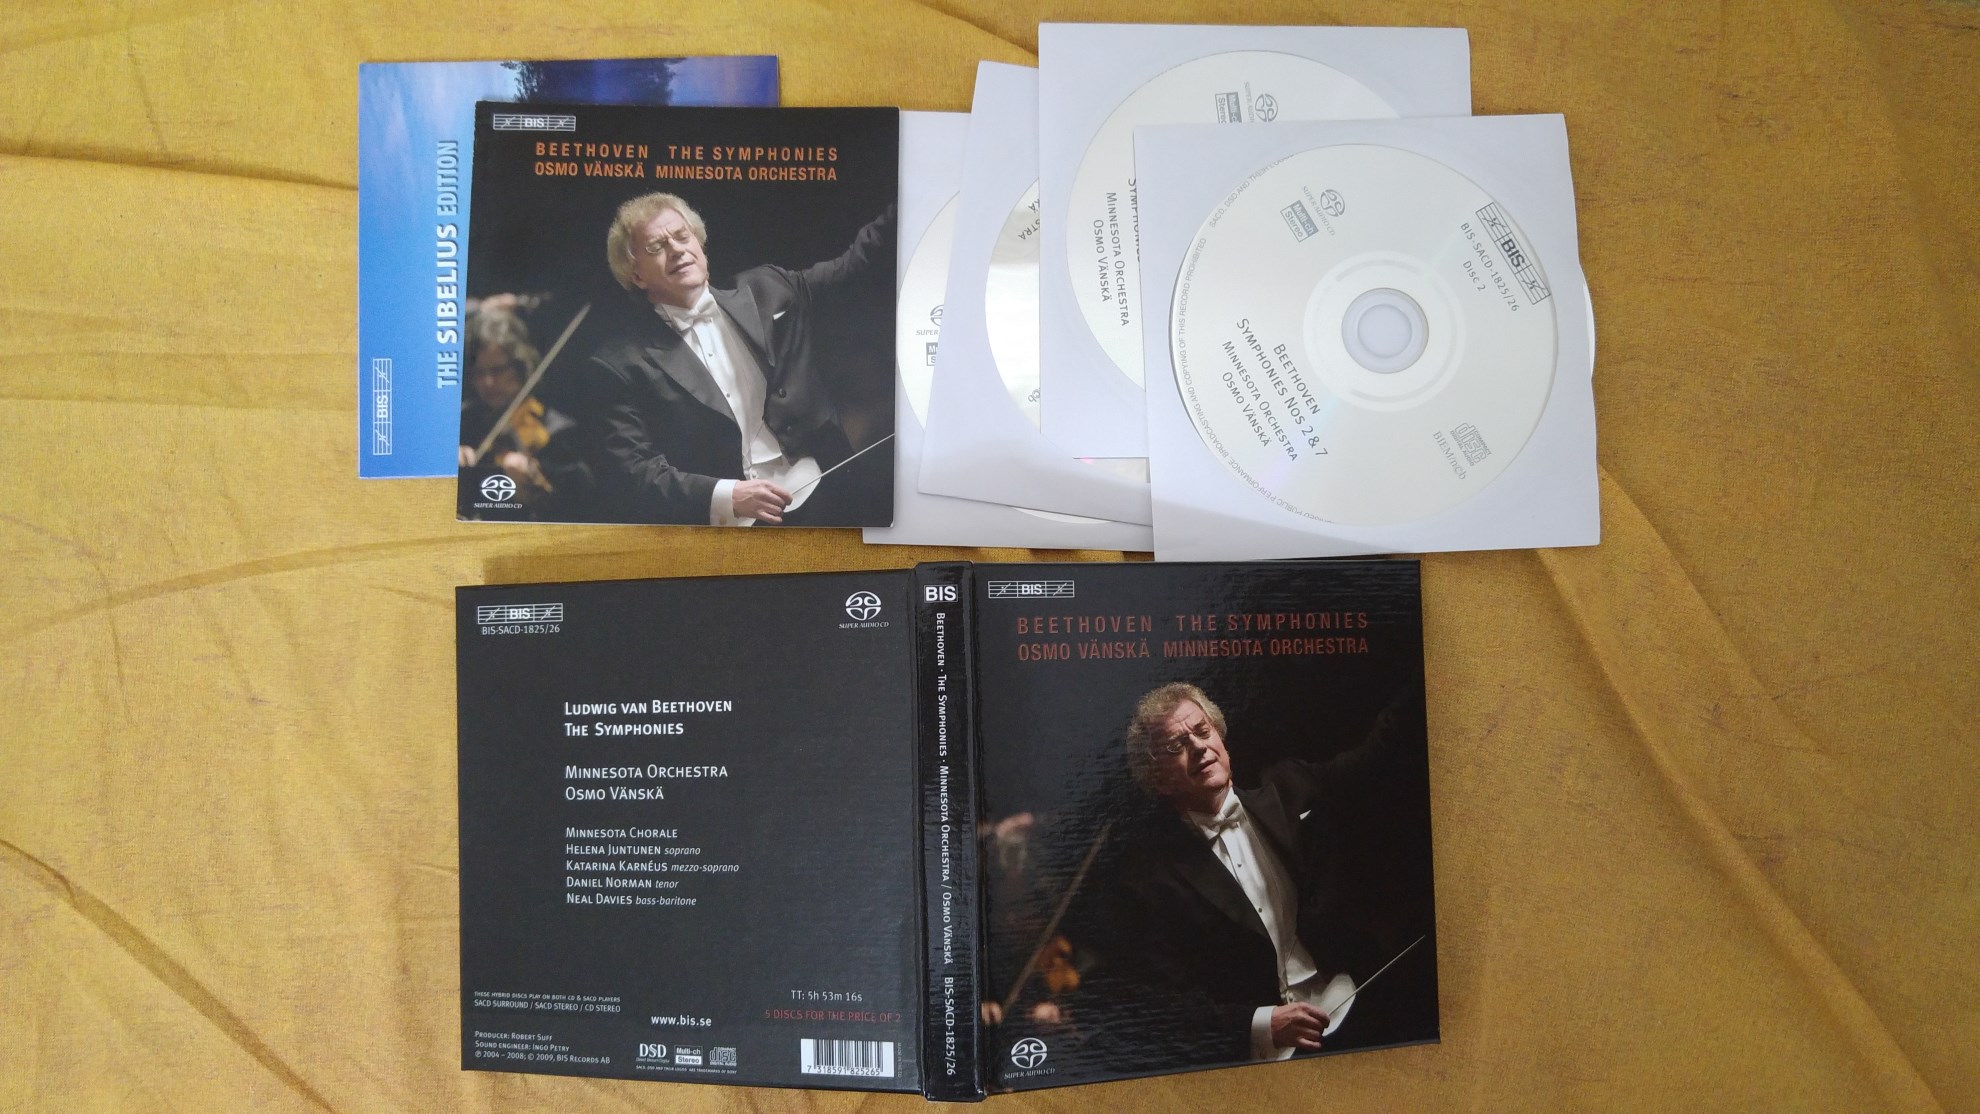 Ludwig van Beethoven - The symphonies (Osmo Vänskä -  Minnesota Orchestra)